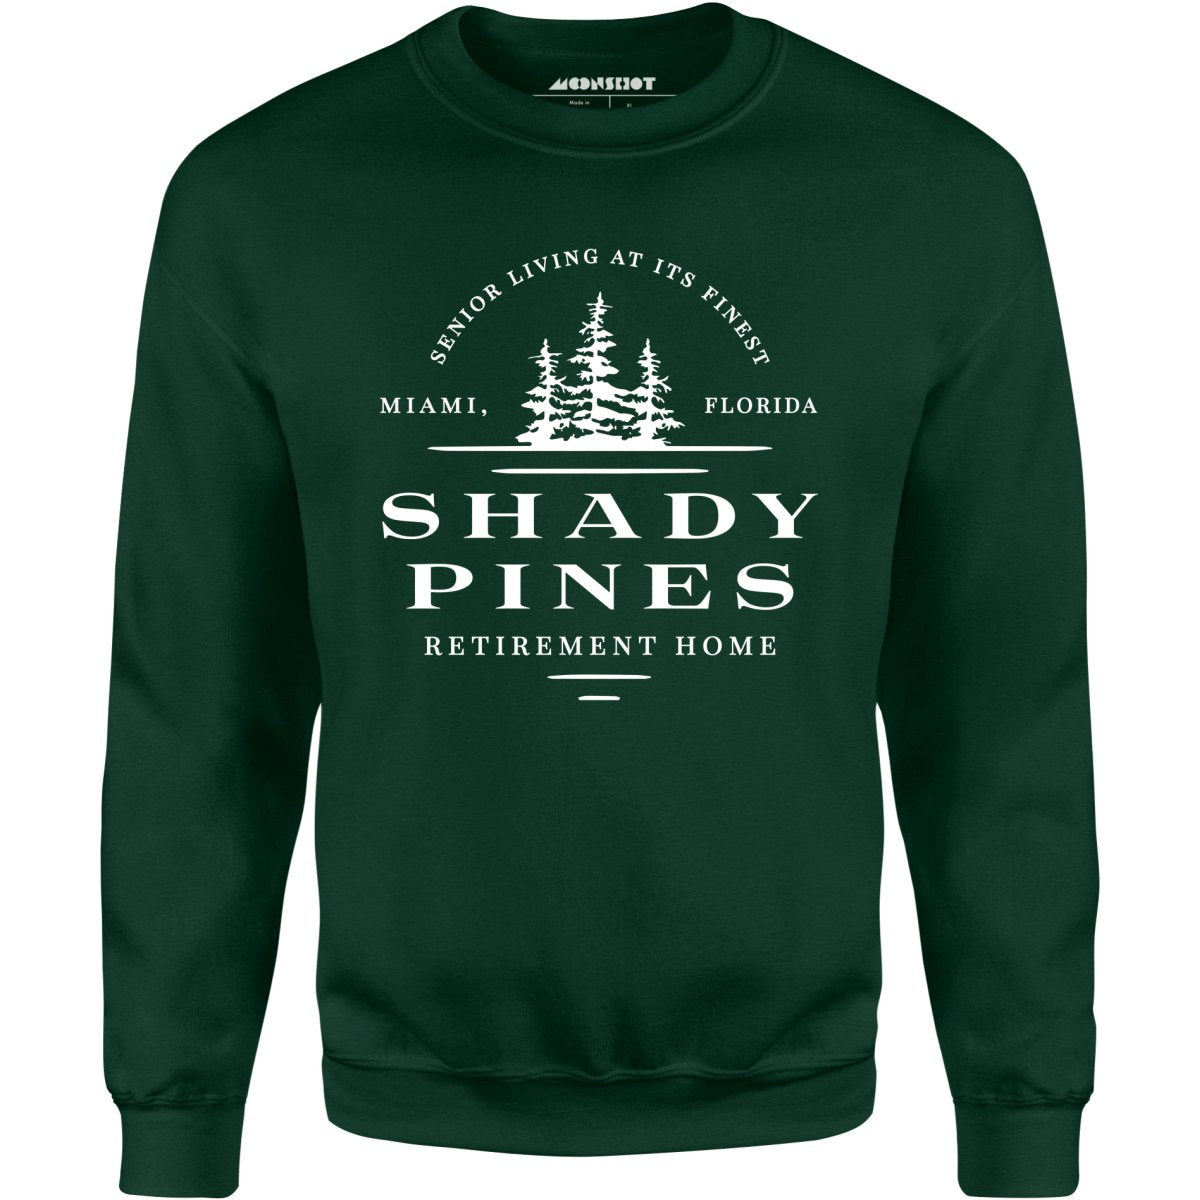 Shady Pines Retirement Home - Unisex Sweatshirt